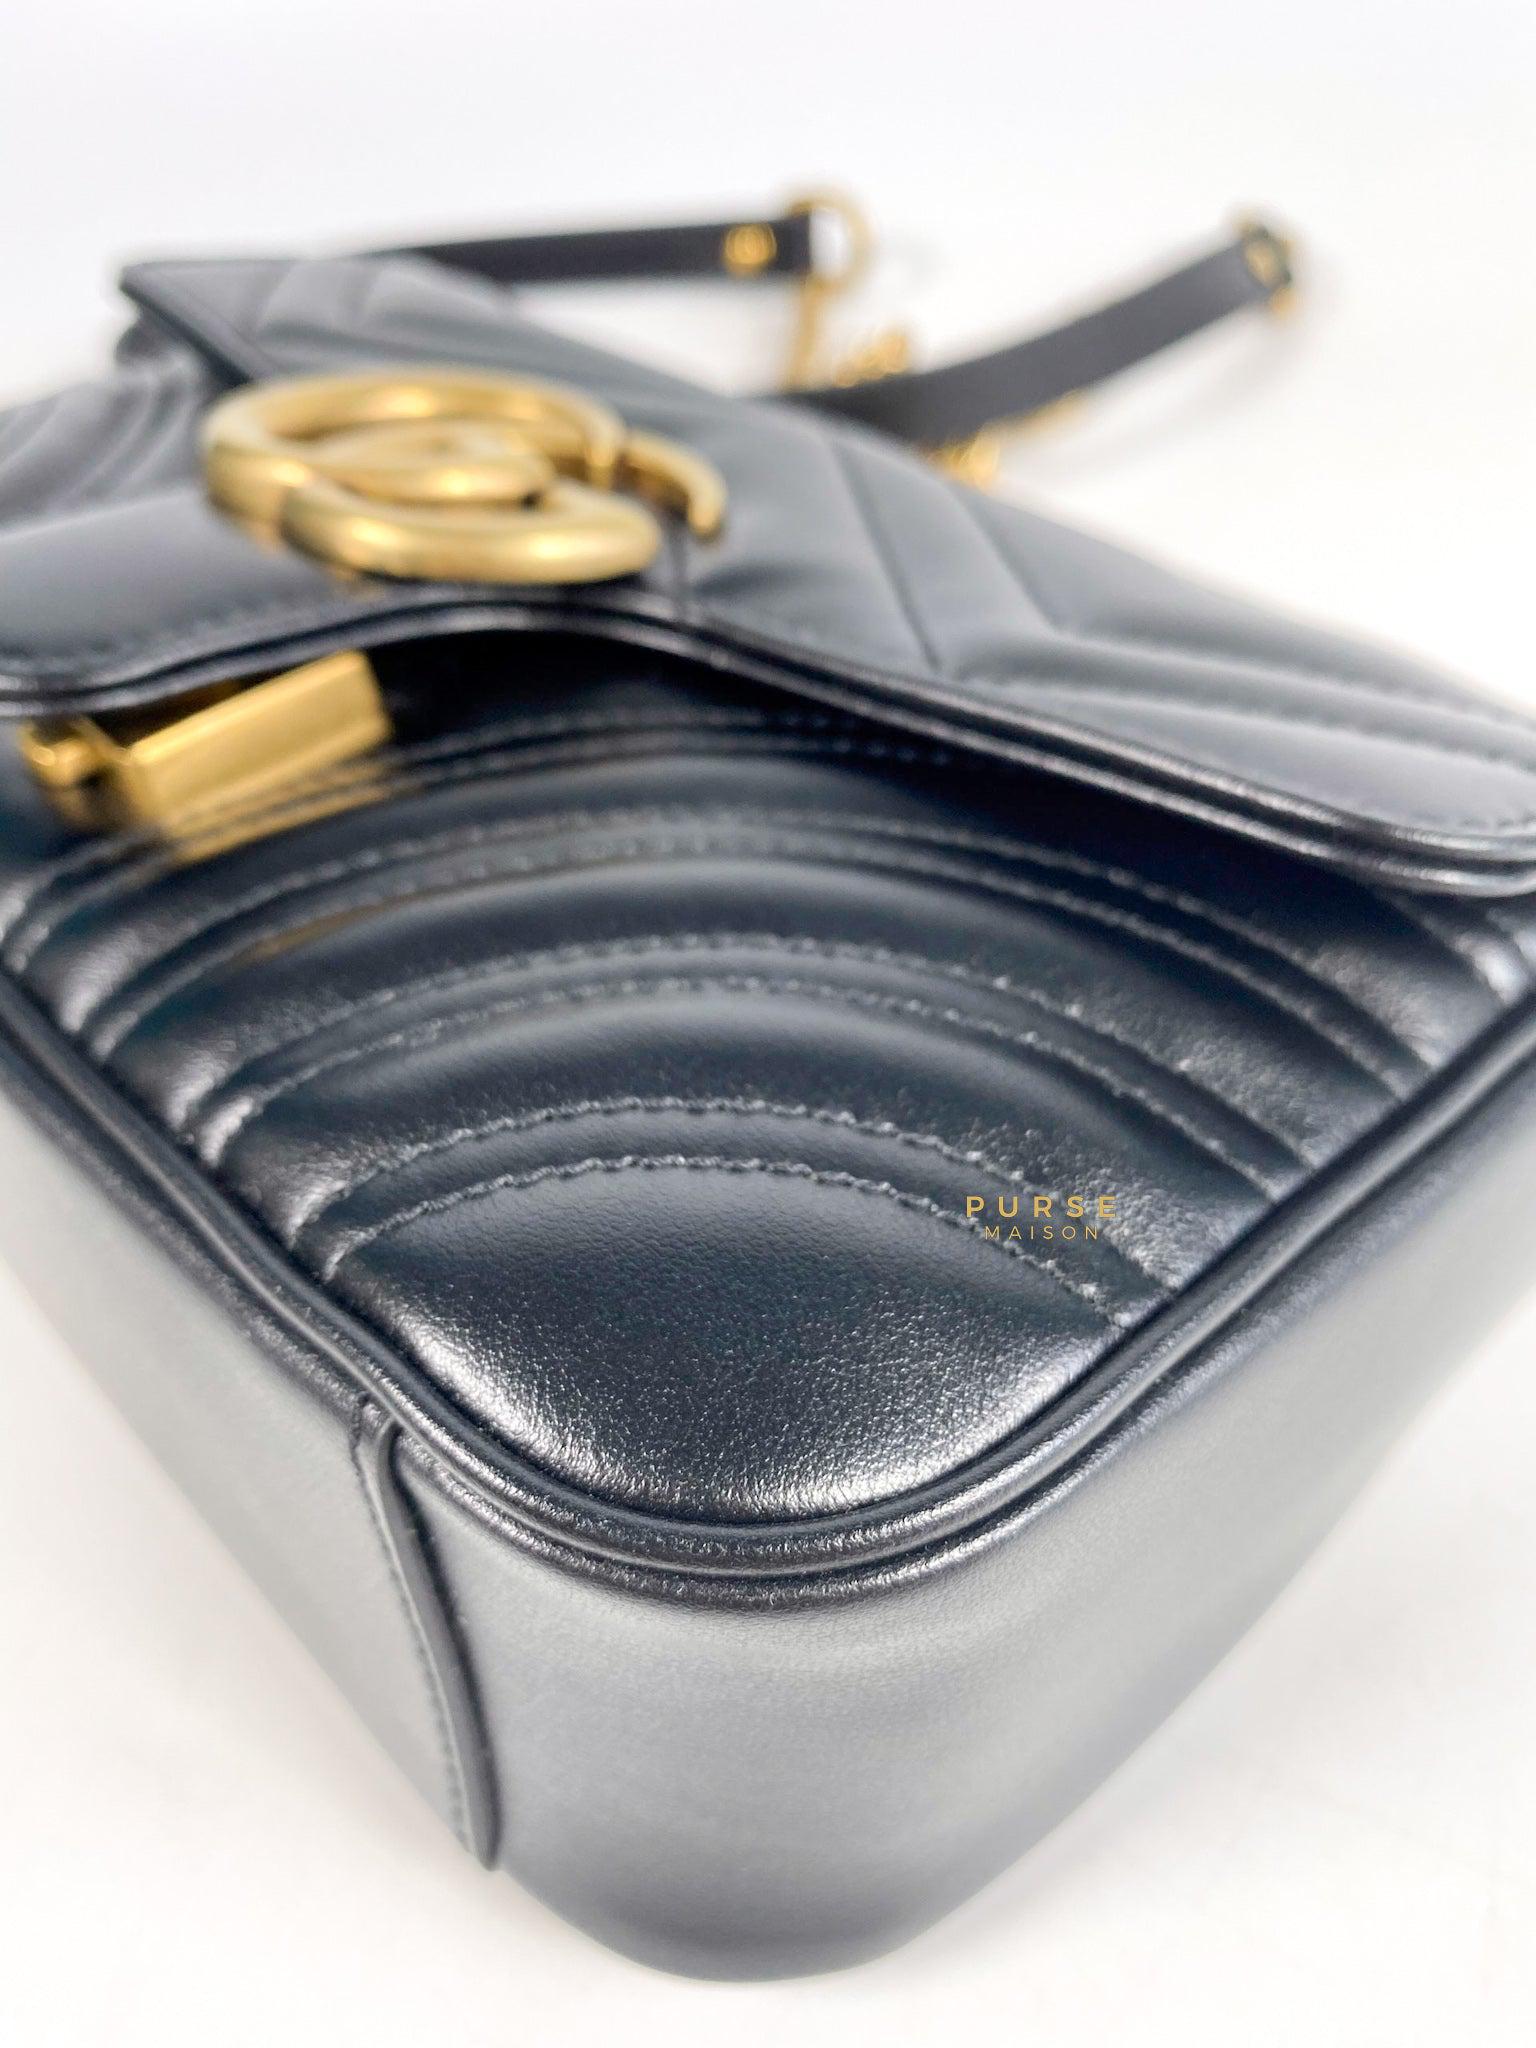 Gucci Marmont Matelassé Mini Flap Bag in Black Leather